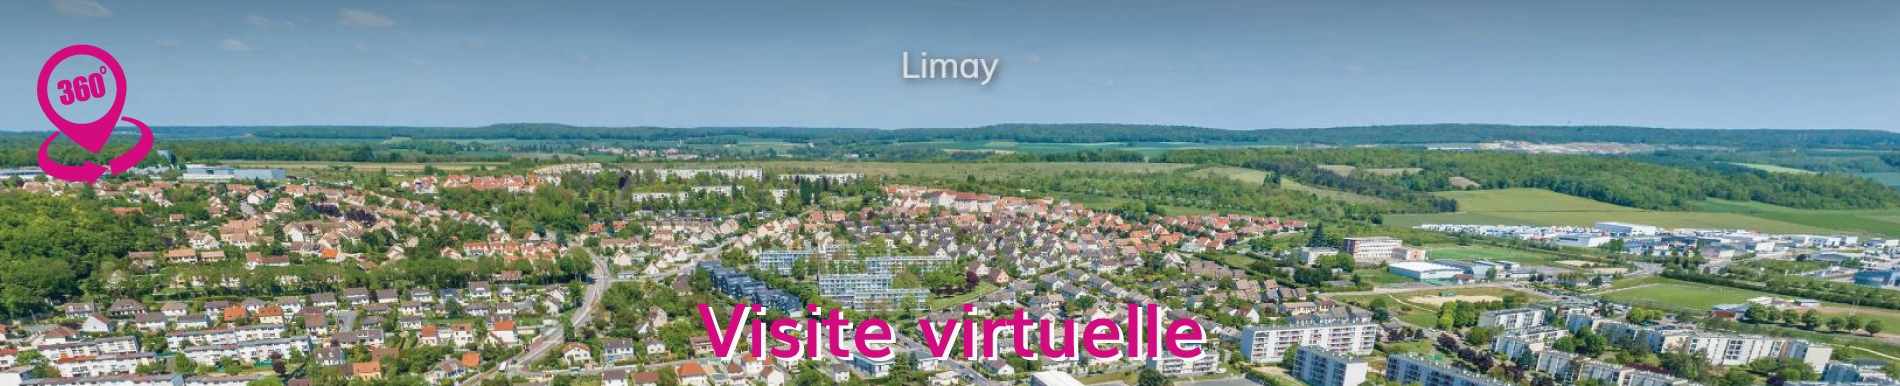 Visite virtuelle Limay